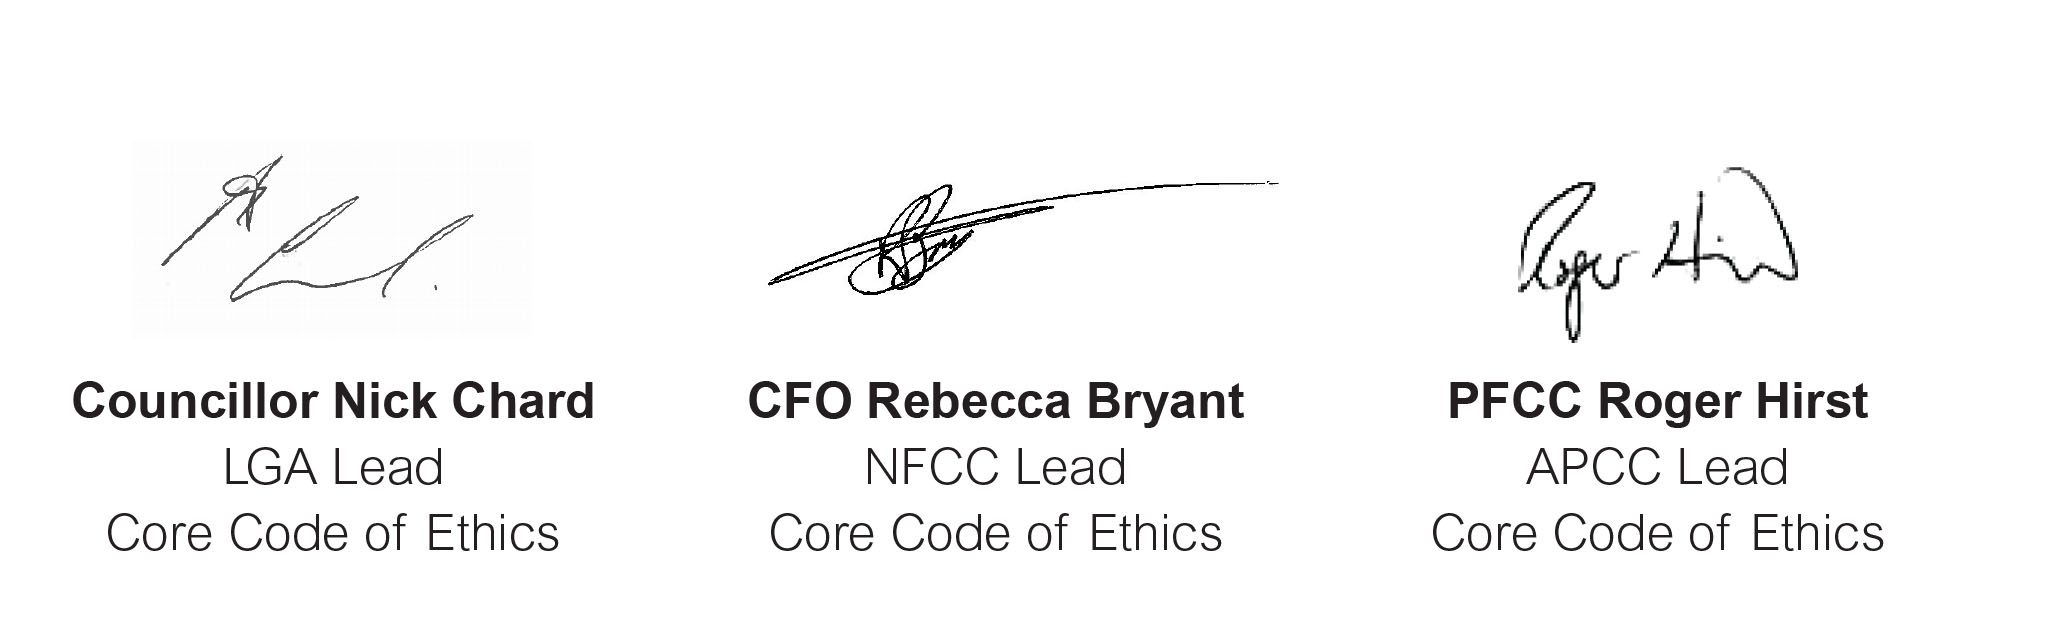 core code of ethics signatures 